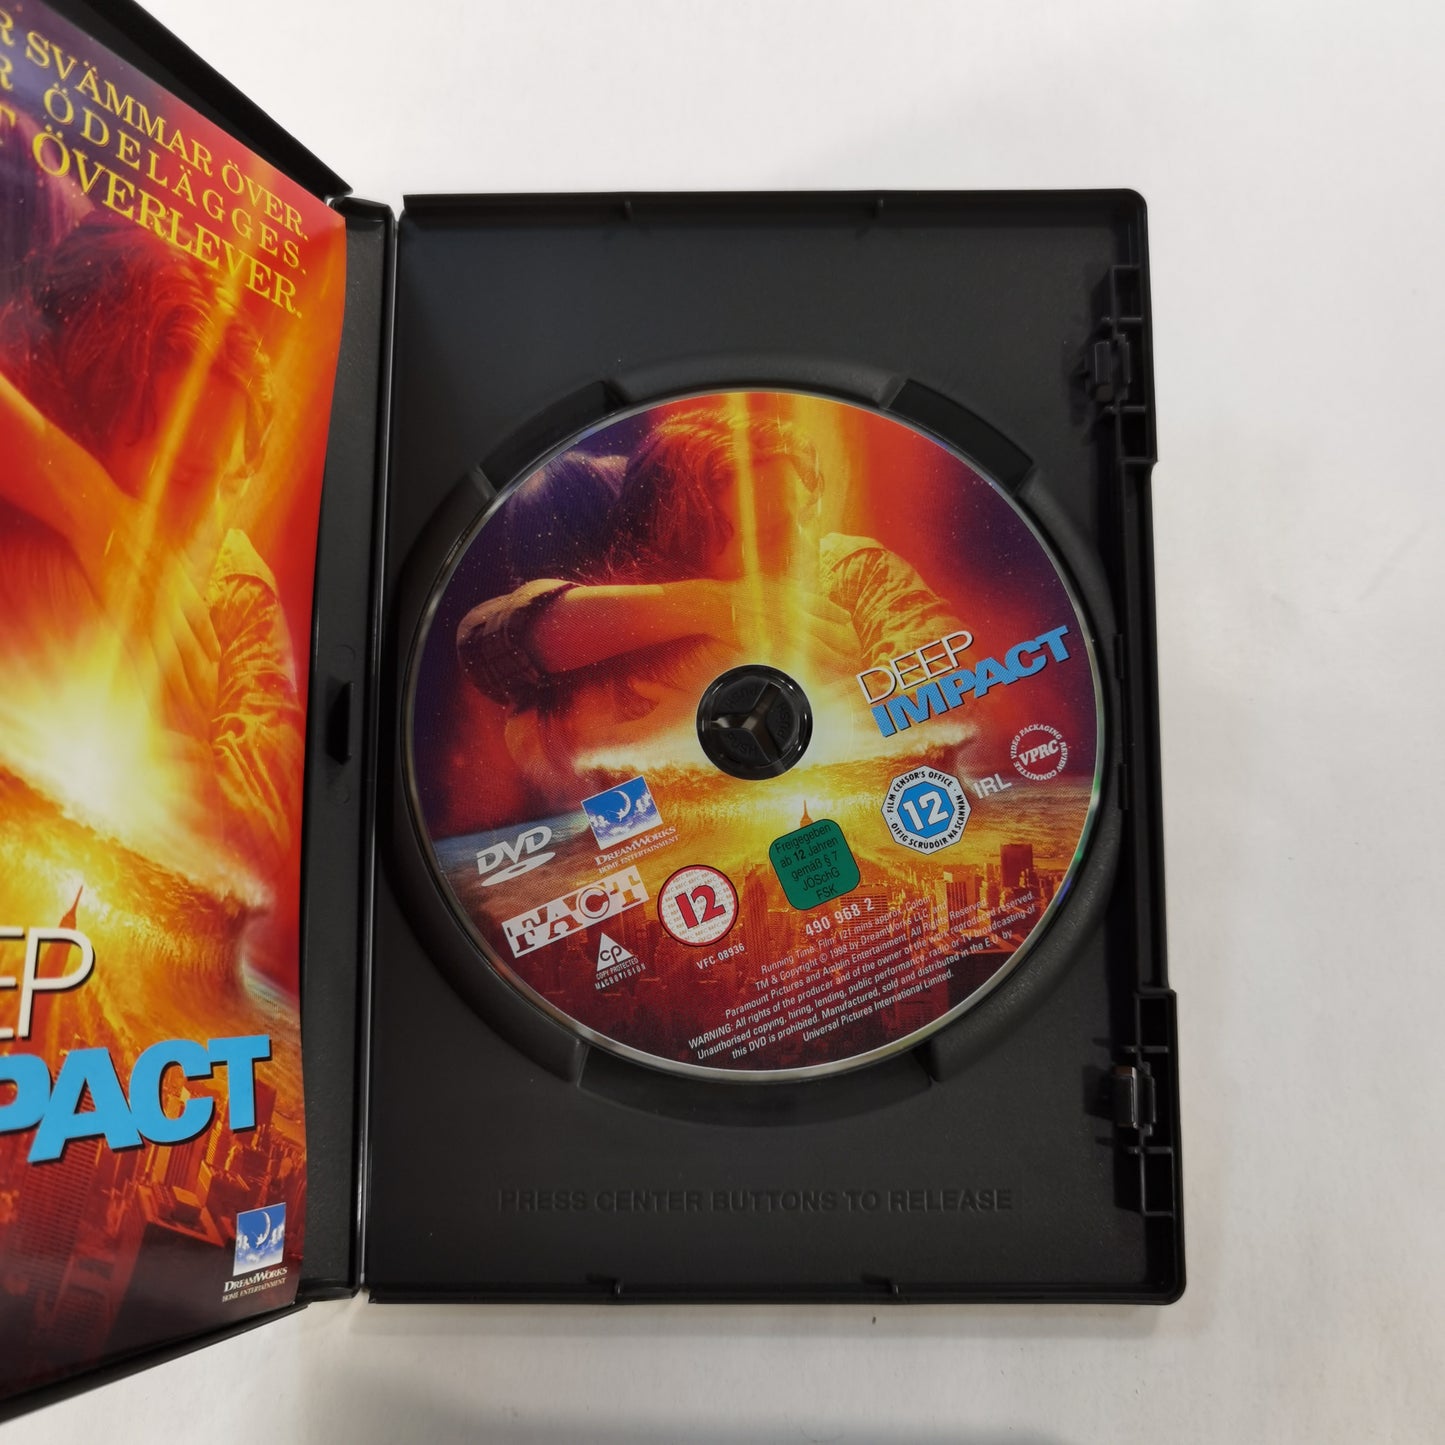 Deep Impact (1998) - DVD SE 2000